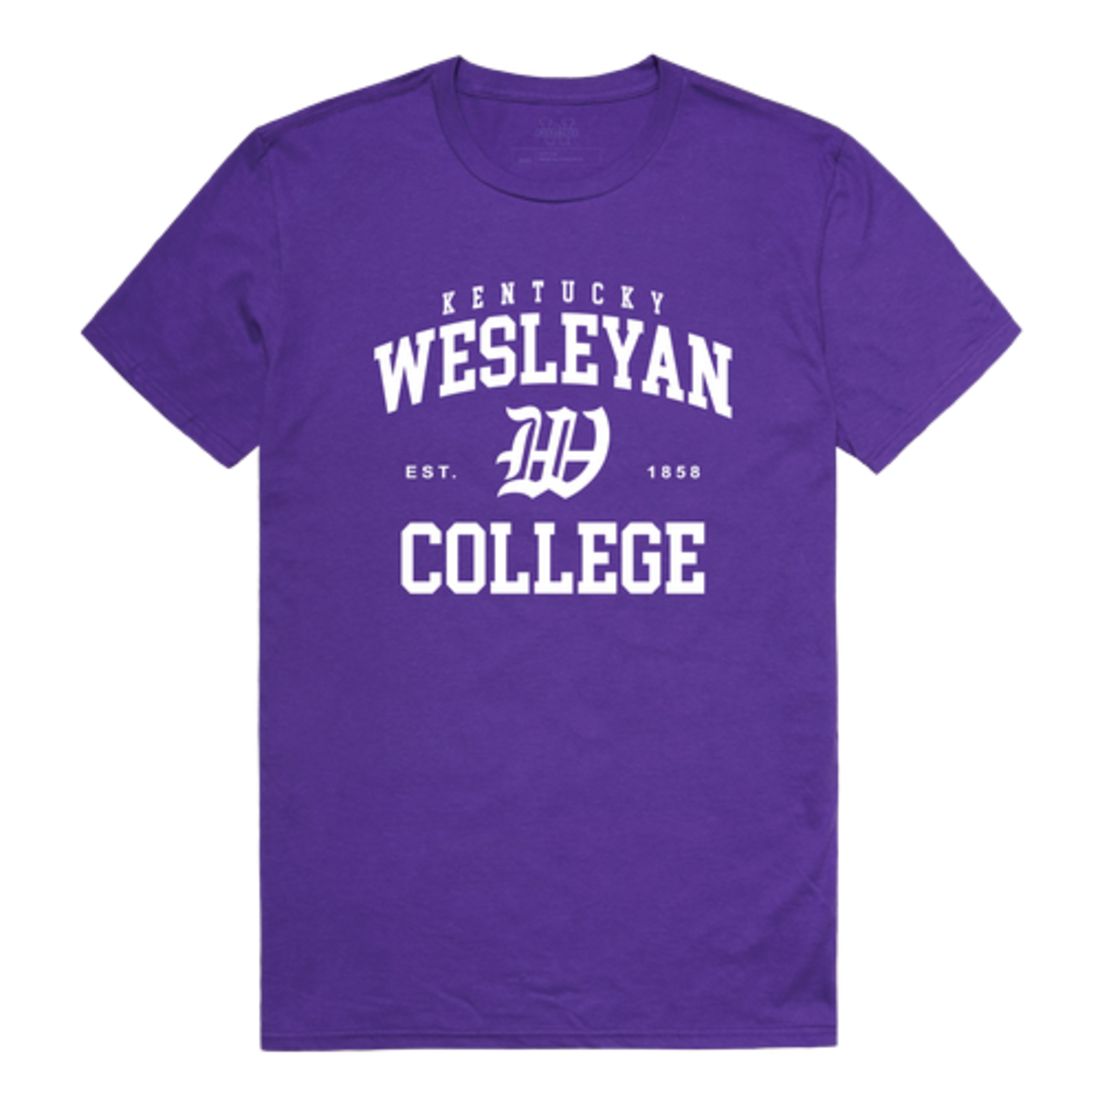 Kentucky Wesleyan College Panthers Seal T-Shirt Tee